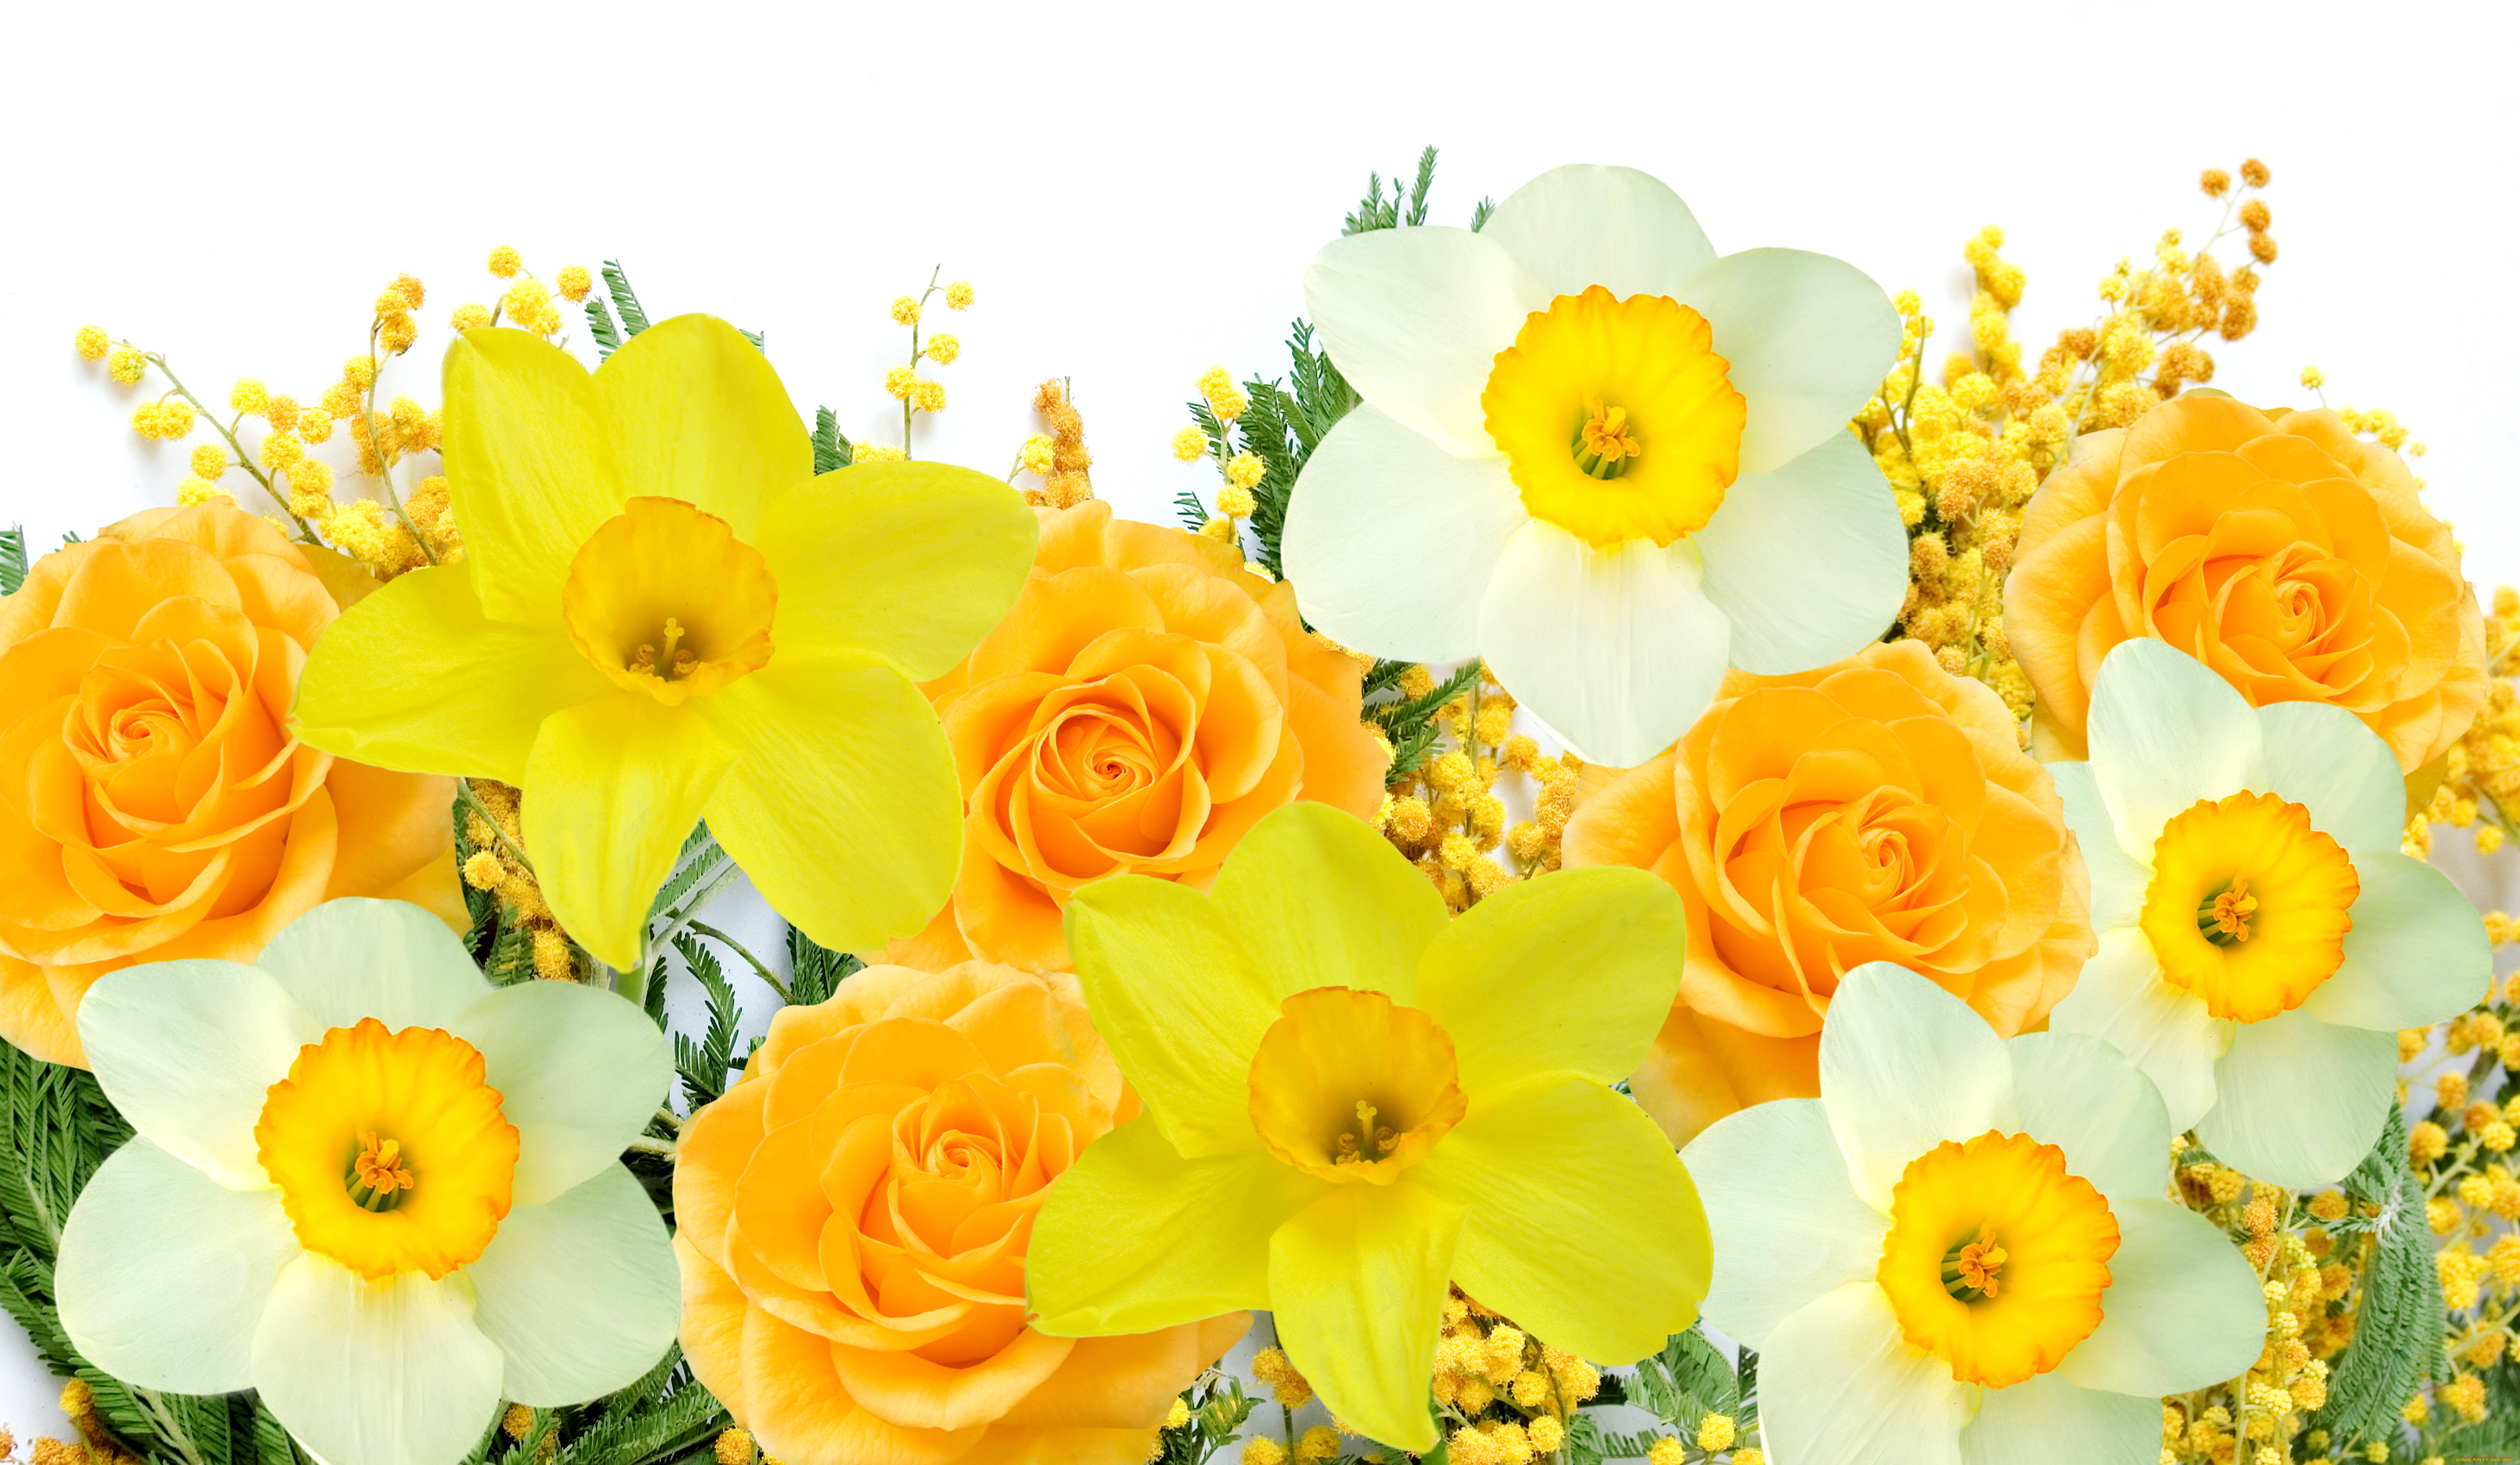 цветы, разные, вместе, spring, flowers, mimosa, daffodils, yellow, white, delicate, мимоза, нарциссы, желтый, белый, весна